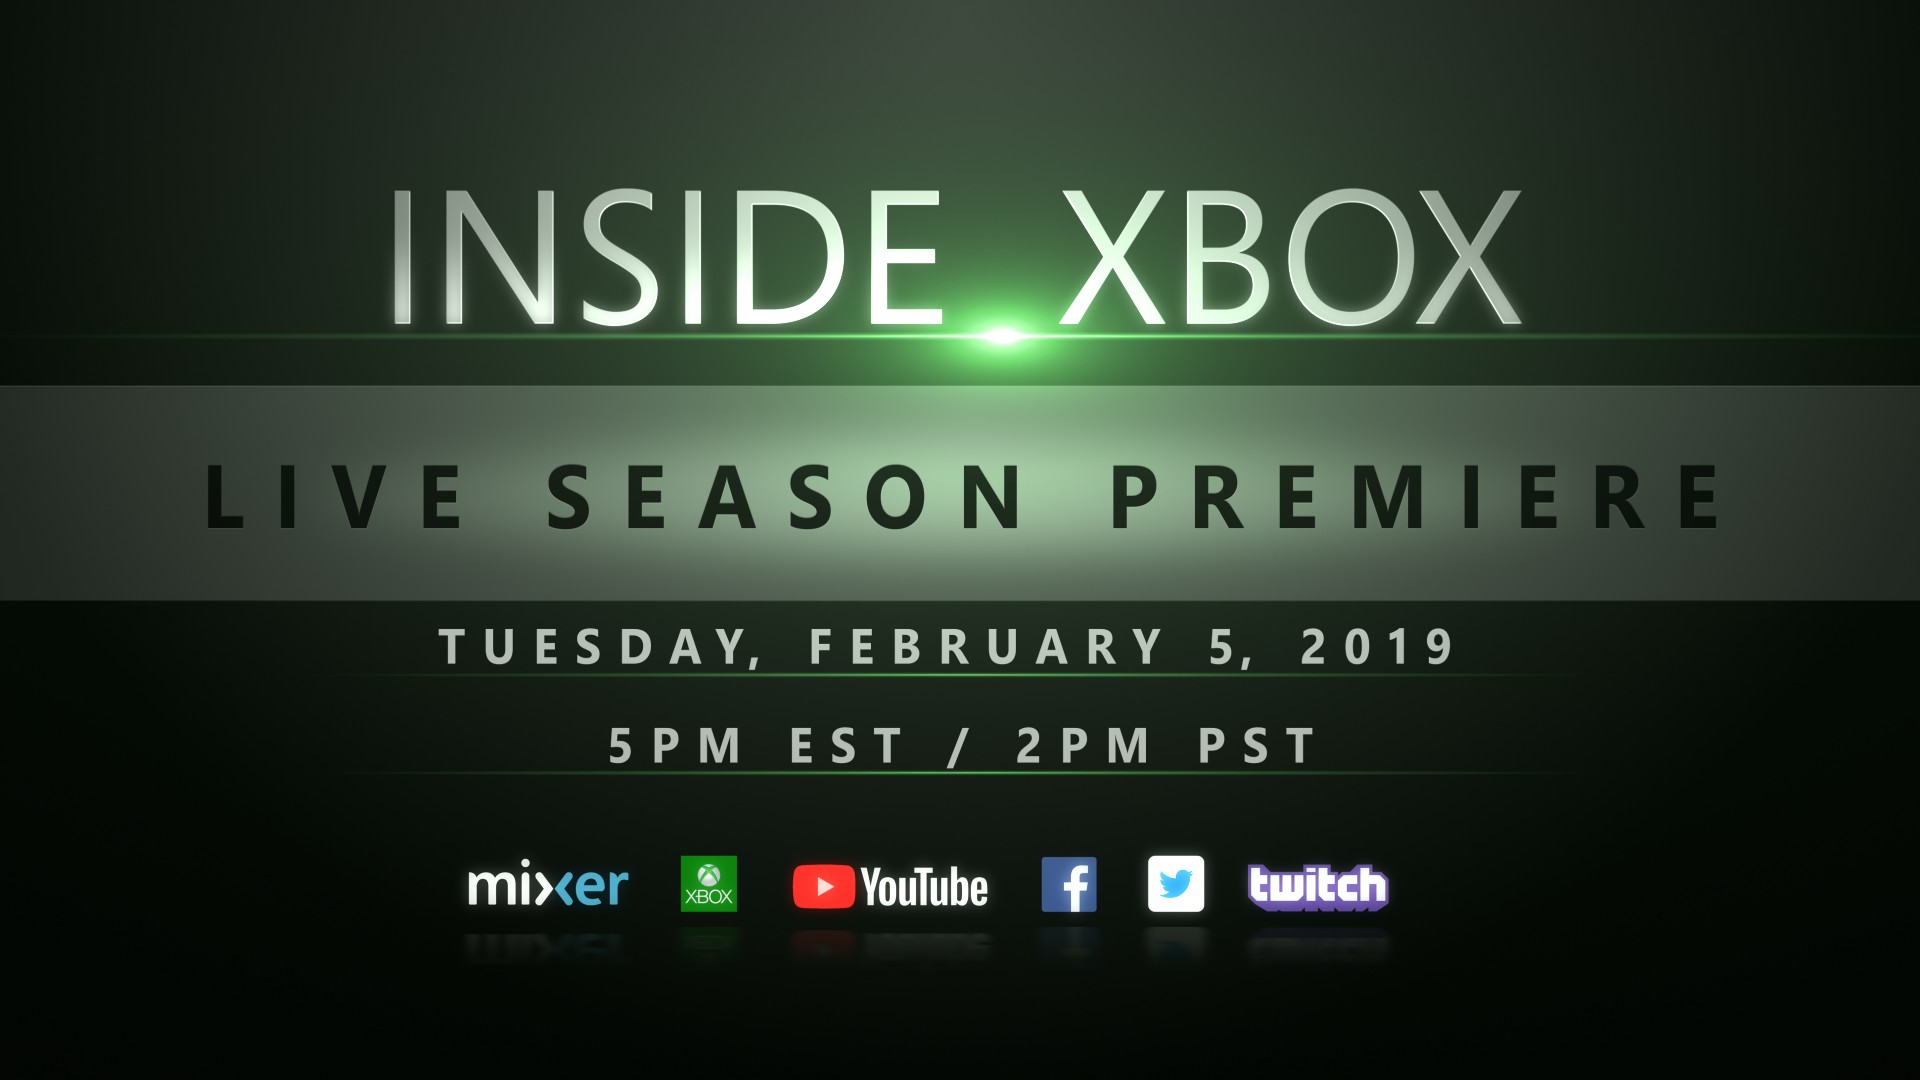 This Week on Xbox: March 29, 2019 2019_Feb05_Inside_Xbox_Promo1_Thumbnail_16x9_V2.jpg